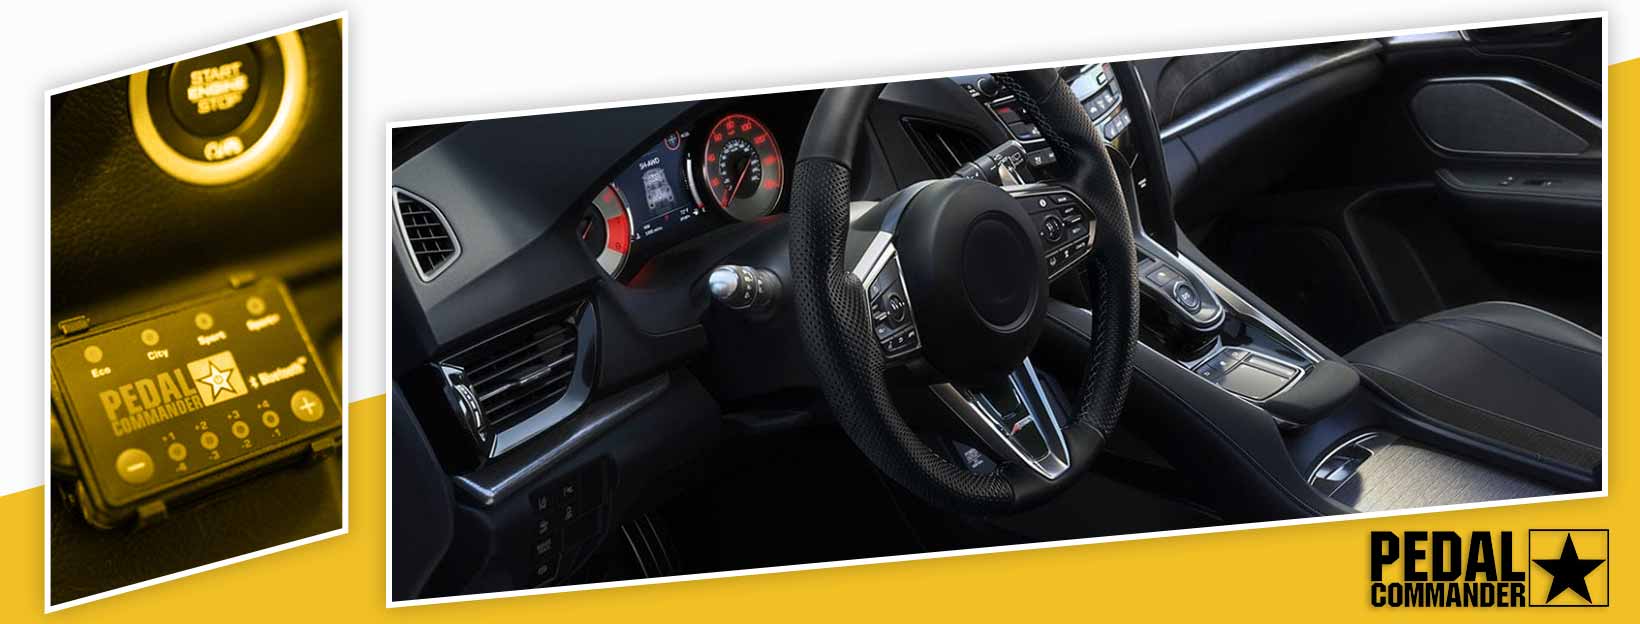 Pedal Commander for Acura RDX - interior